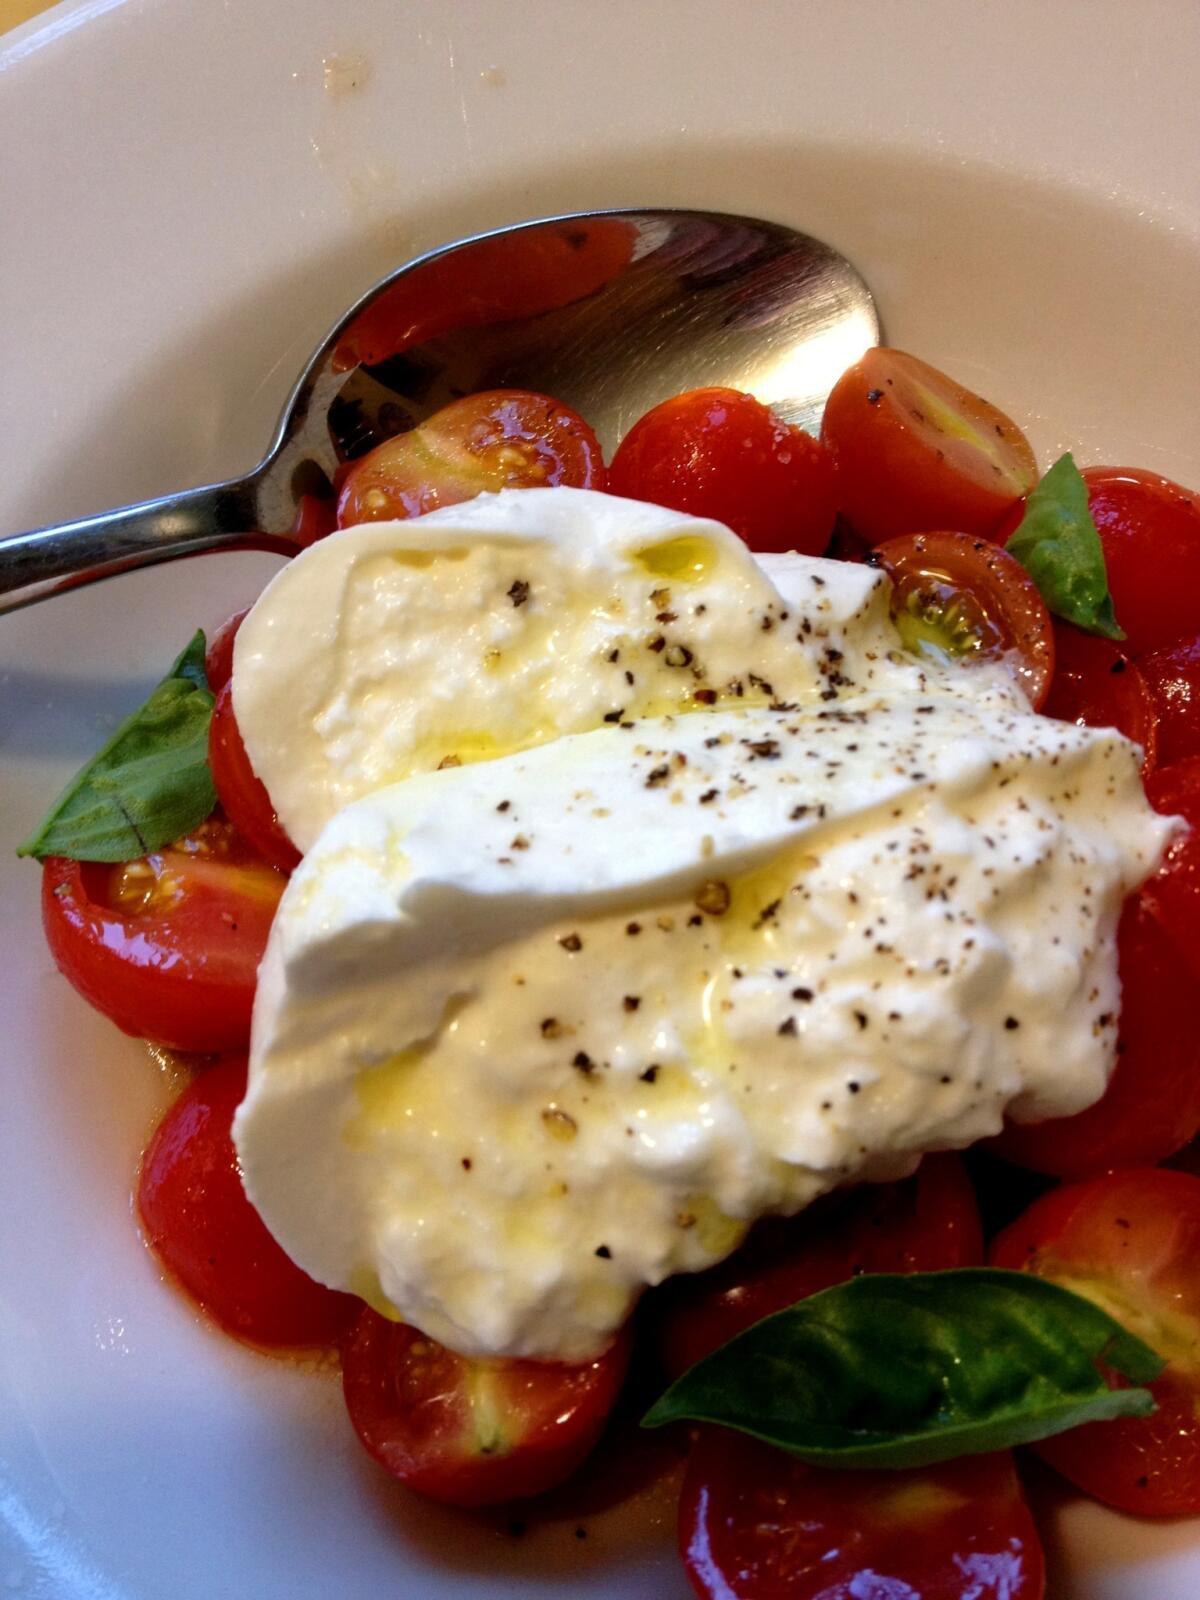 Tomato salad with burrata.